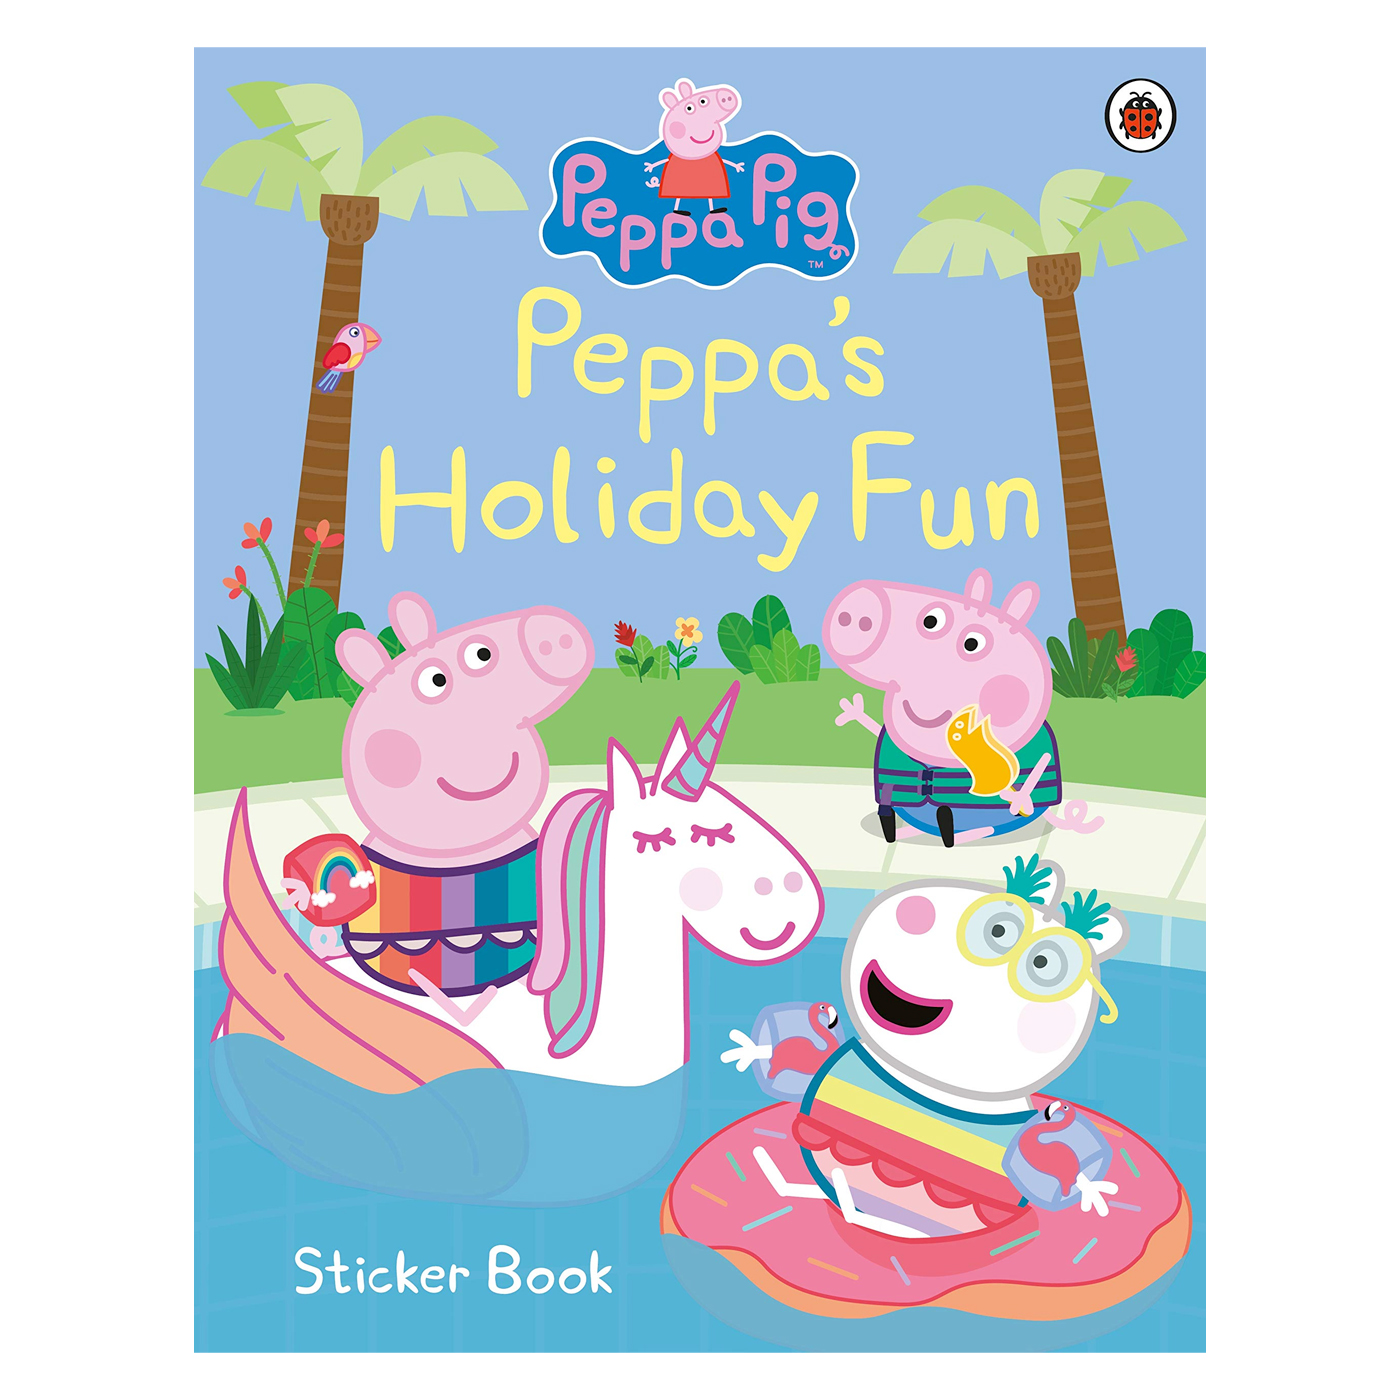  Peppa Pig: Peppas Holiday Fun Sticker Book